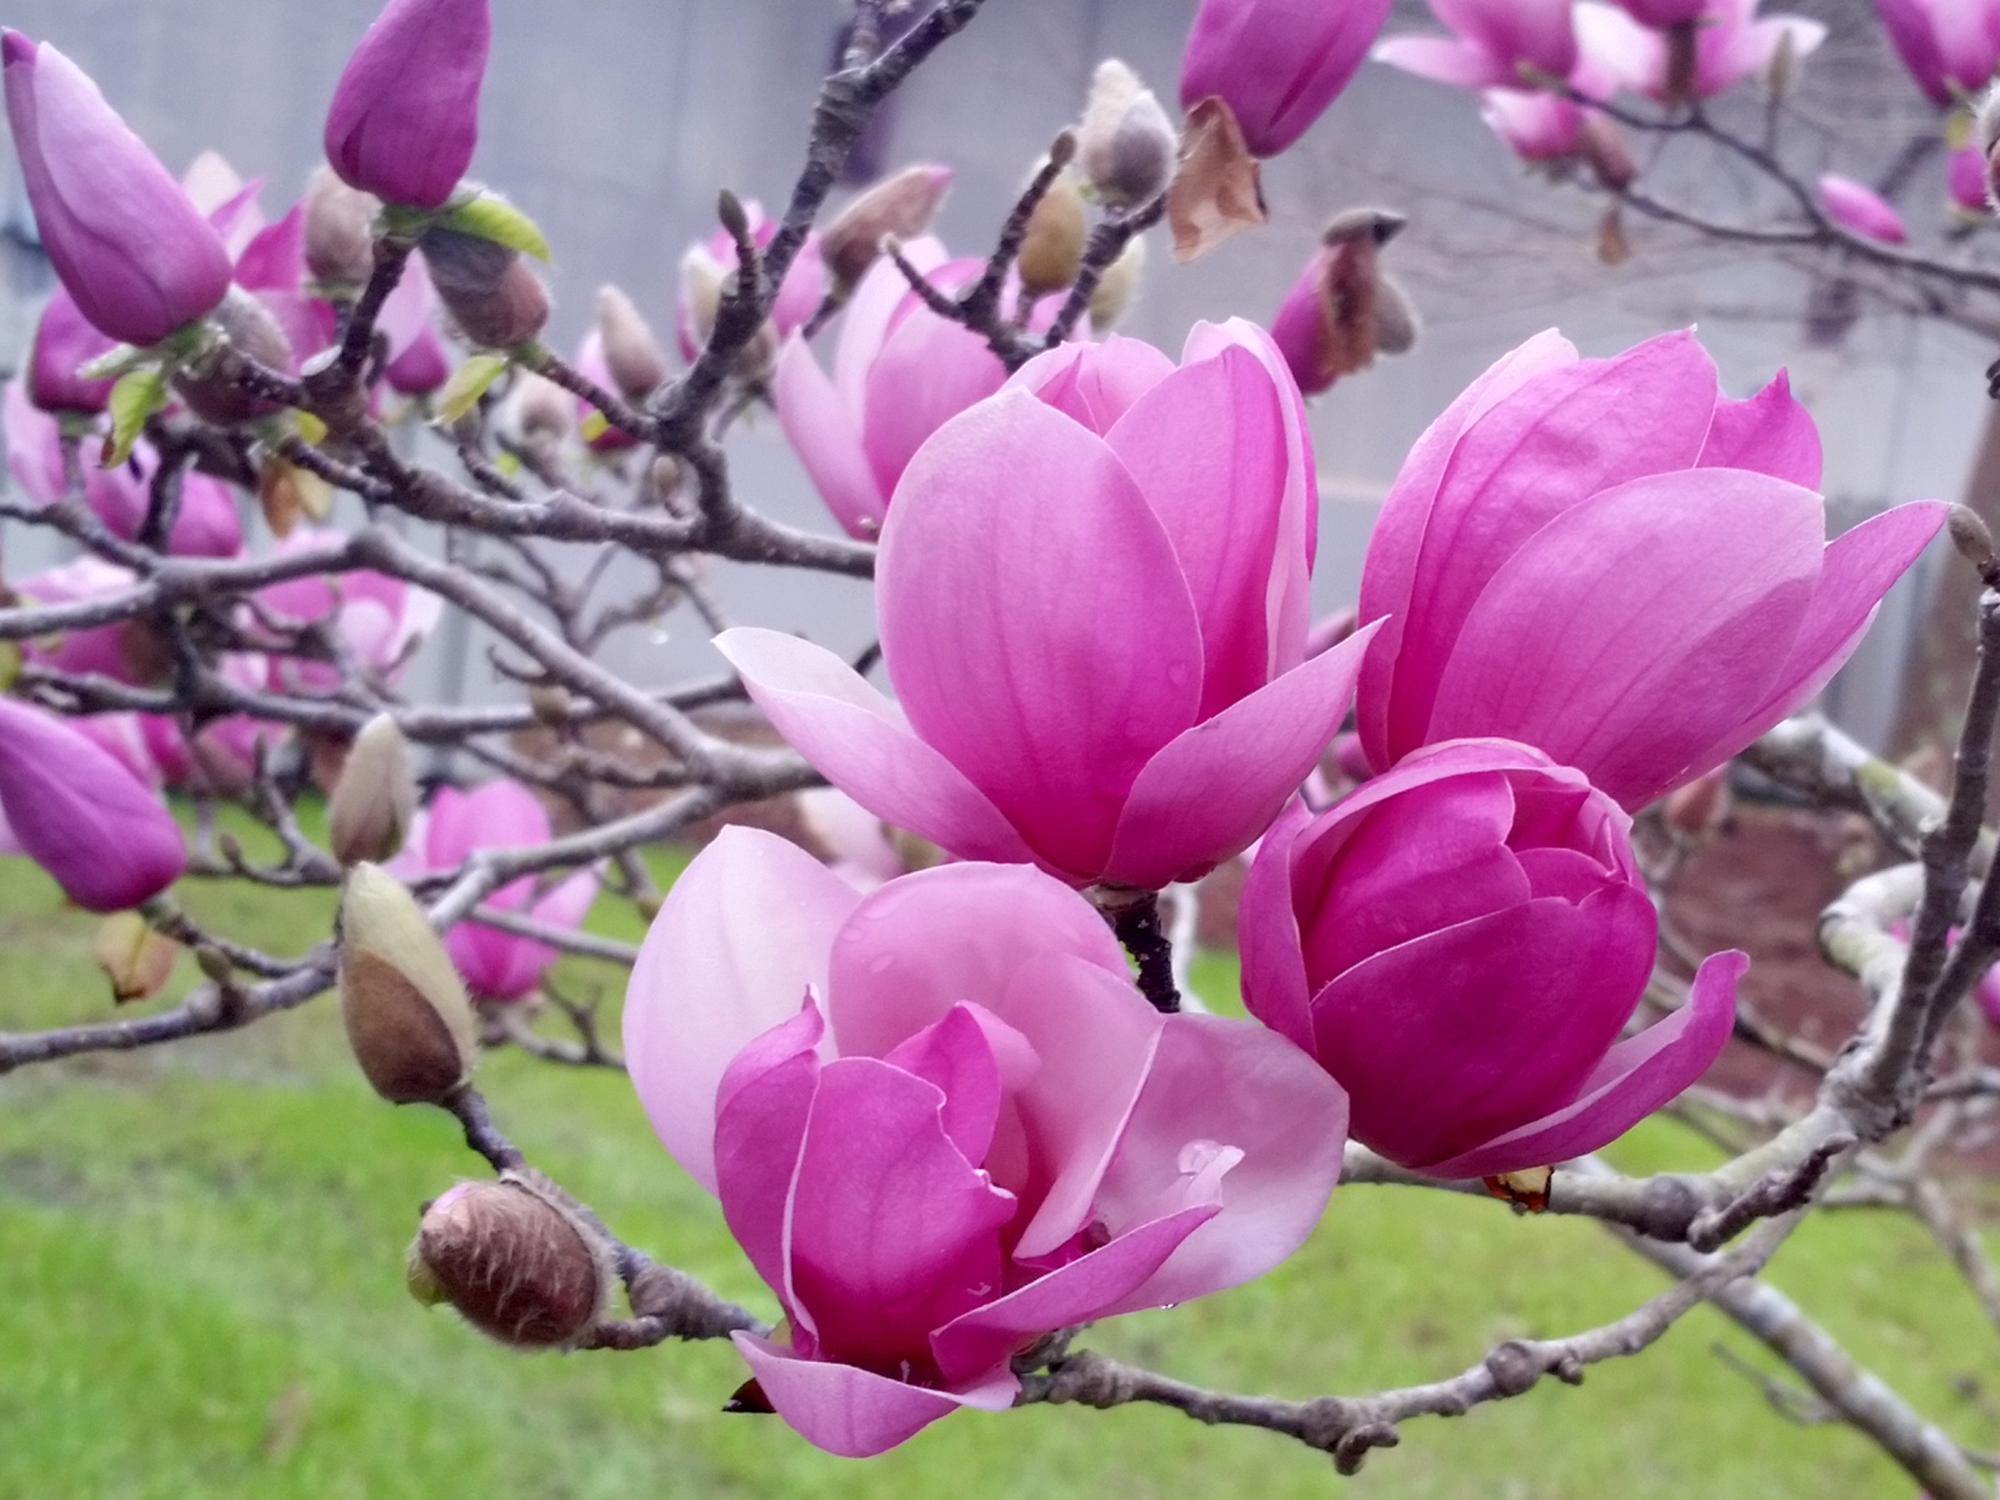 saucer magnolia blooms herald arrival of spring | mississippi